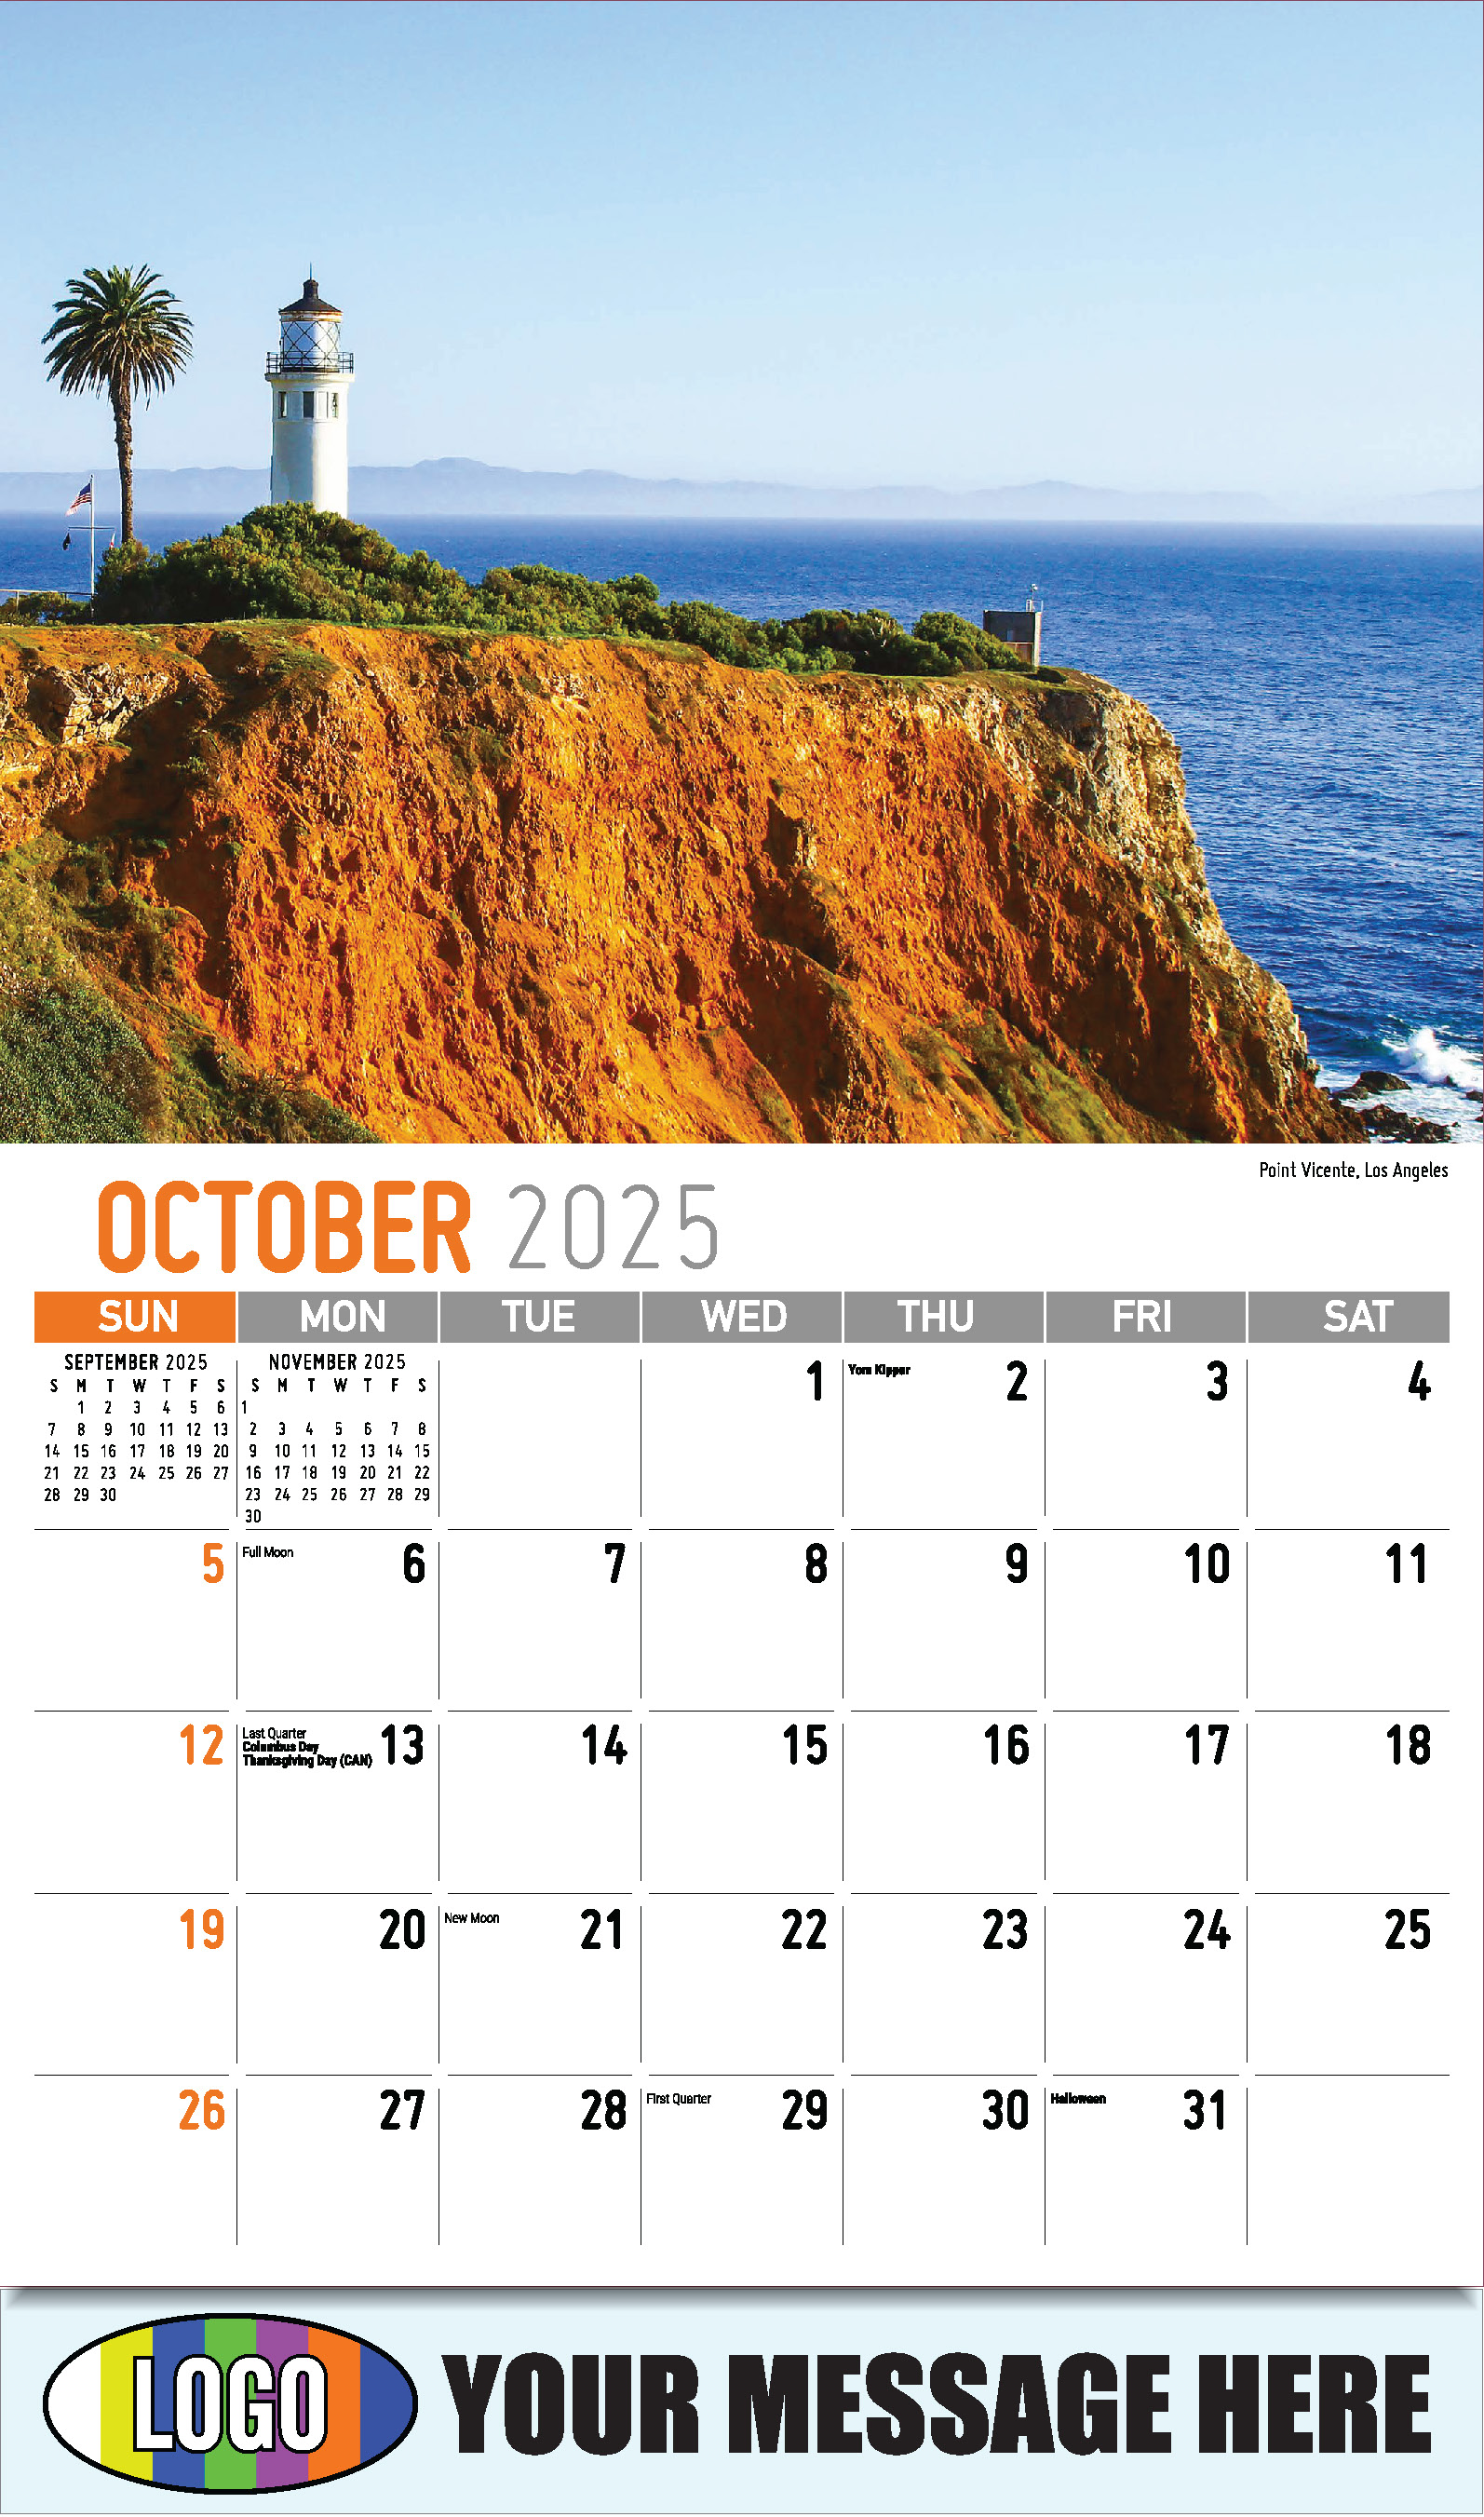 Scenes of California 2025 Business Advertising Wall Calendar - October